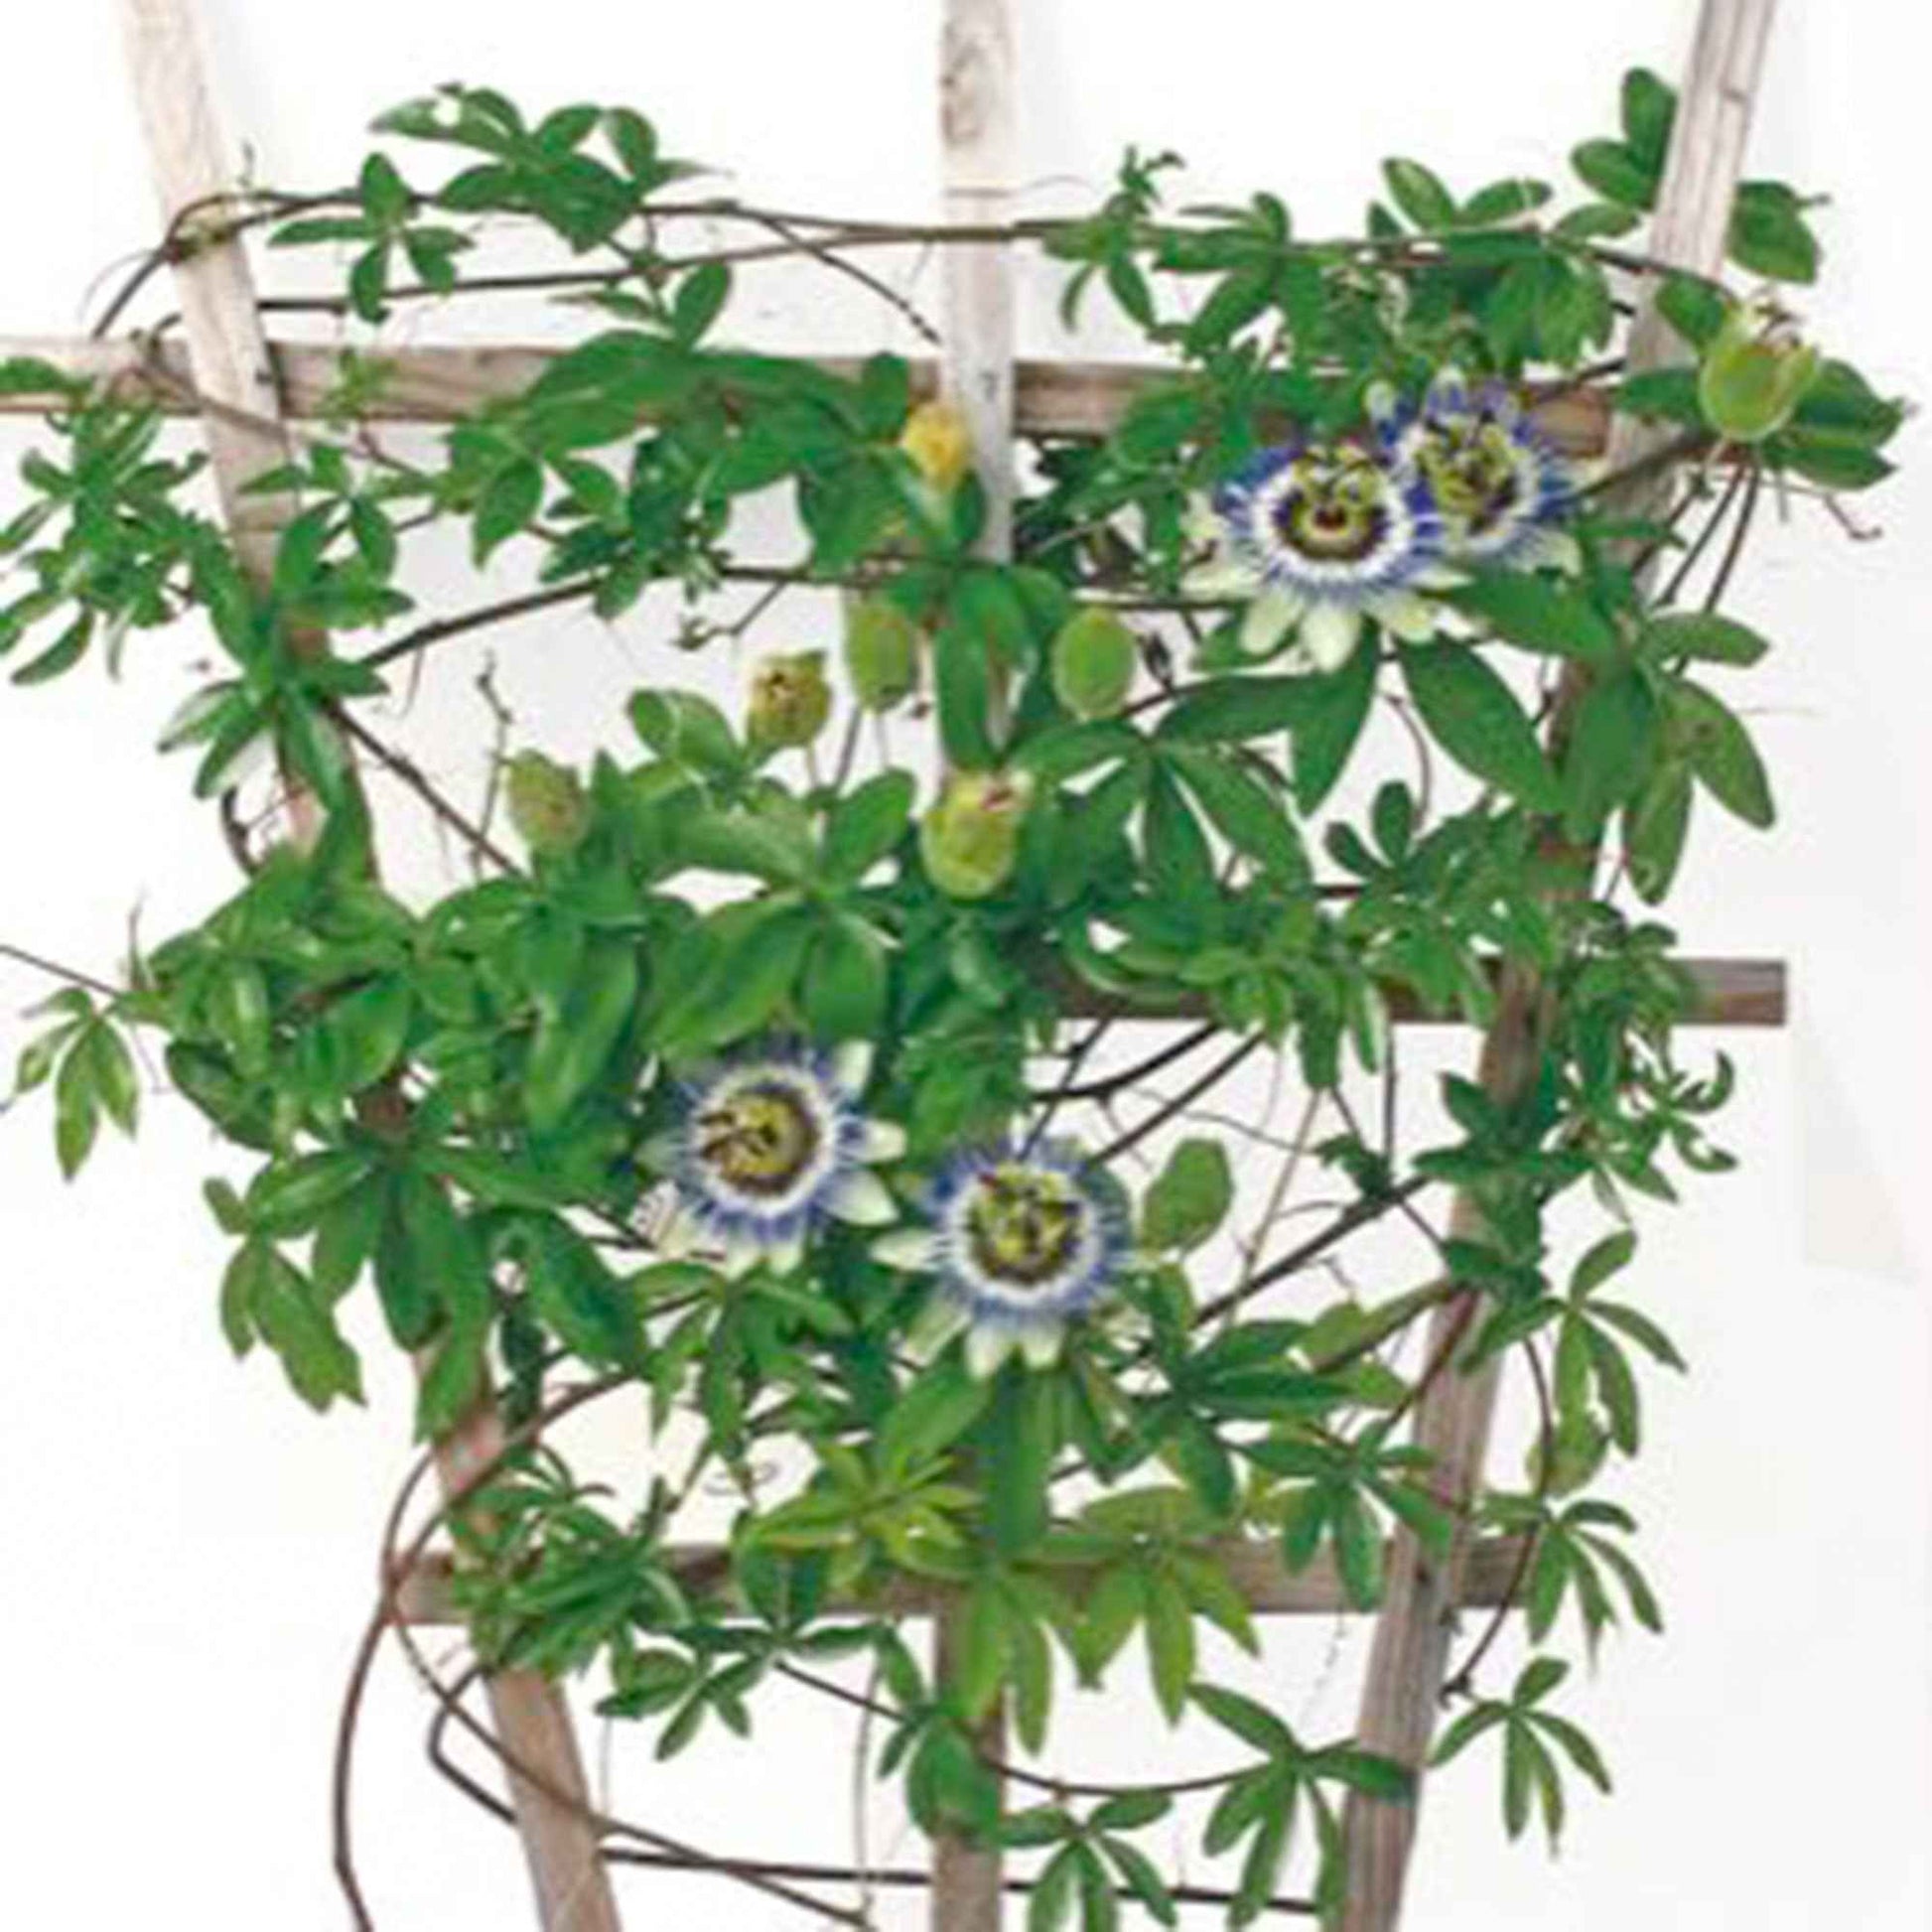 Graines de Passiflore caerulea – Passiflore bleue. Plante grimpante